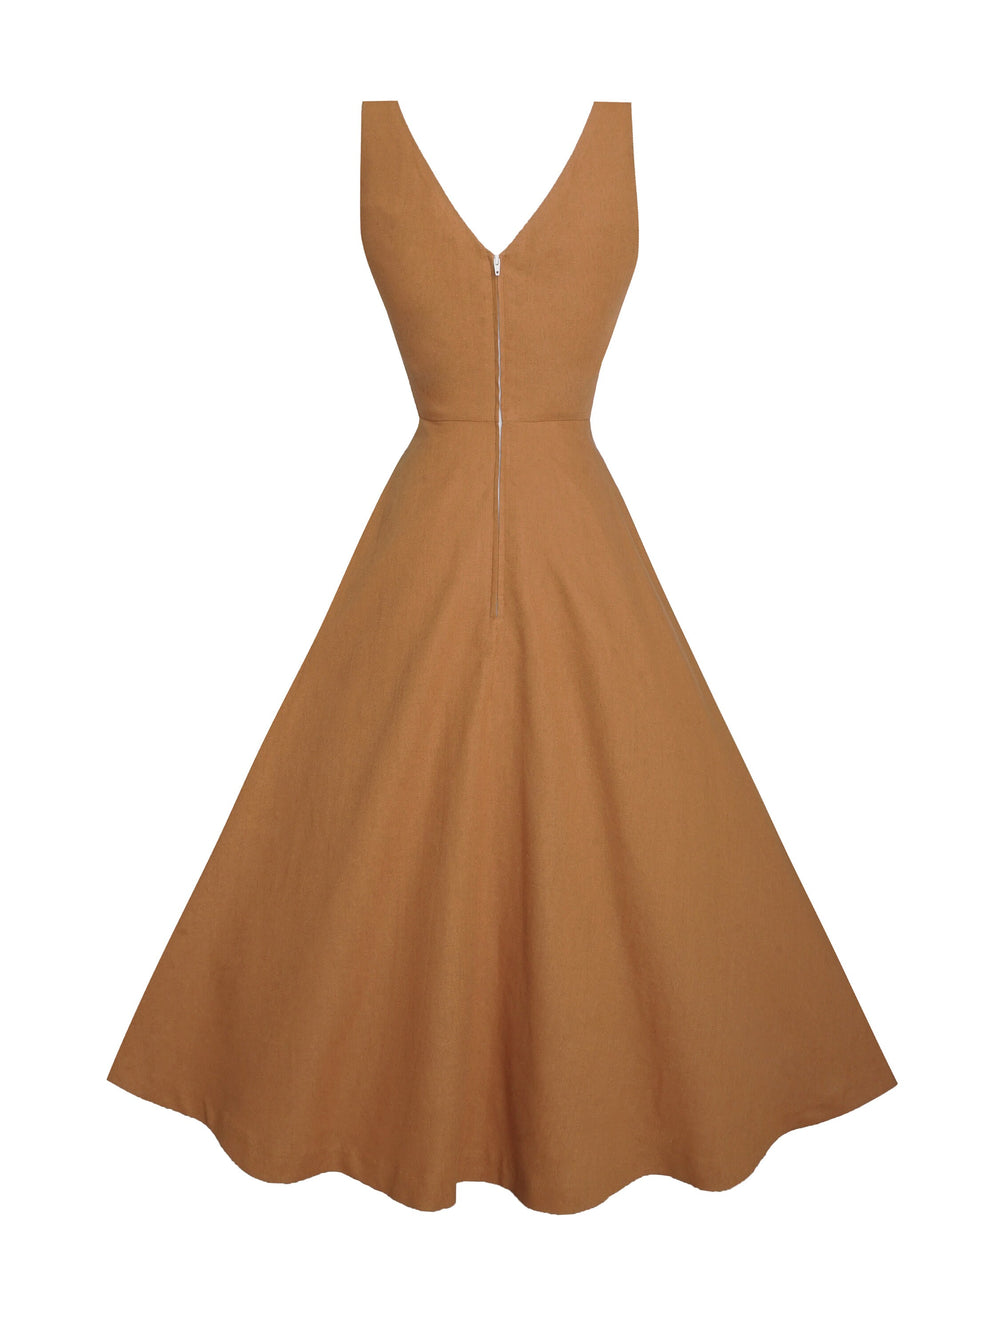 MTO - Diana Dress in Caramel Linen